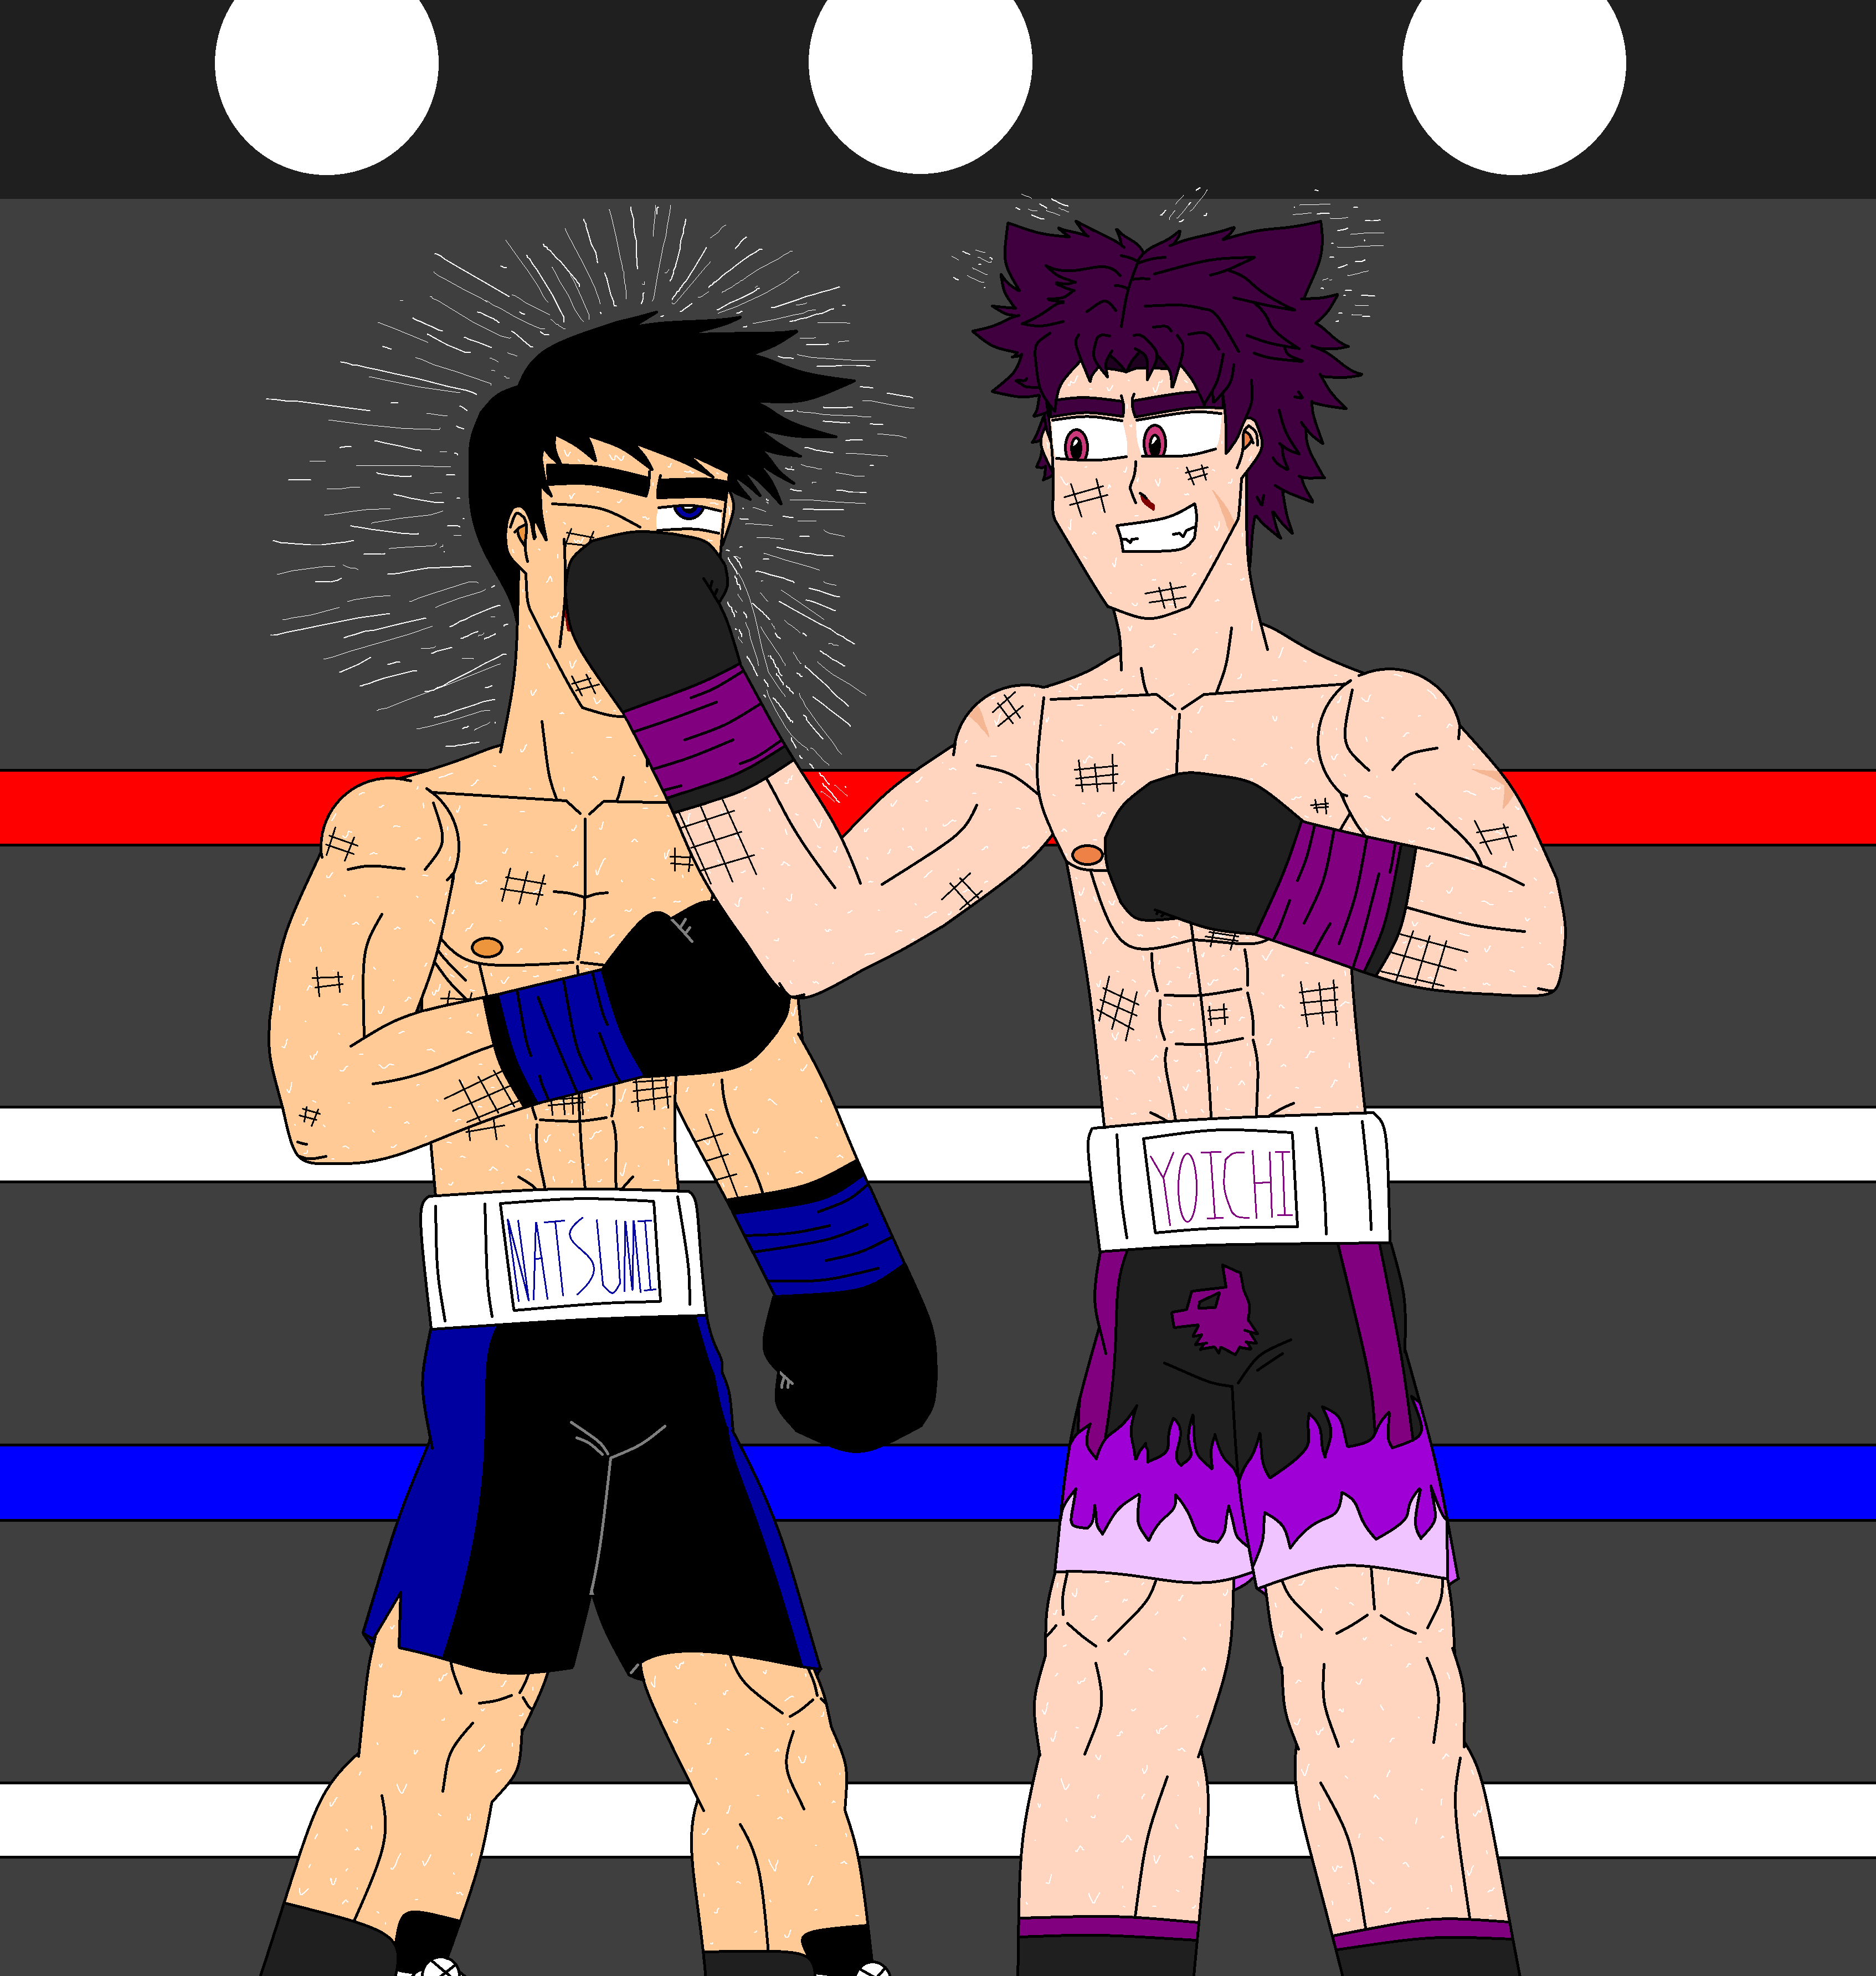 ippo makunouchi sparring con Ricardo Martinez by esechicobenja on DeviantArt